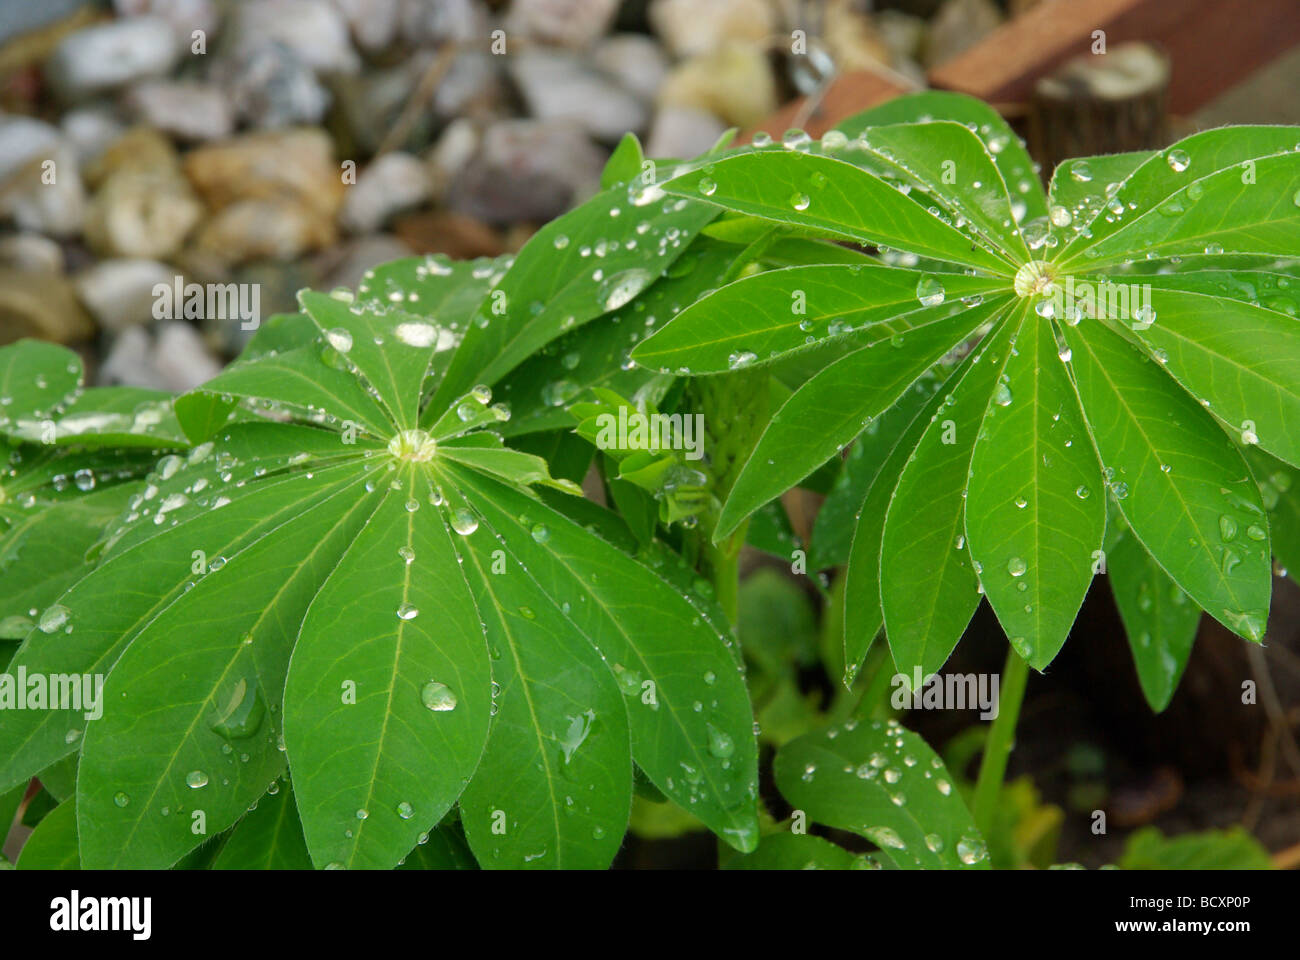 Lupine Blatt lupin leaf 04 Stock Photo